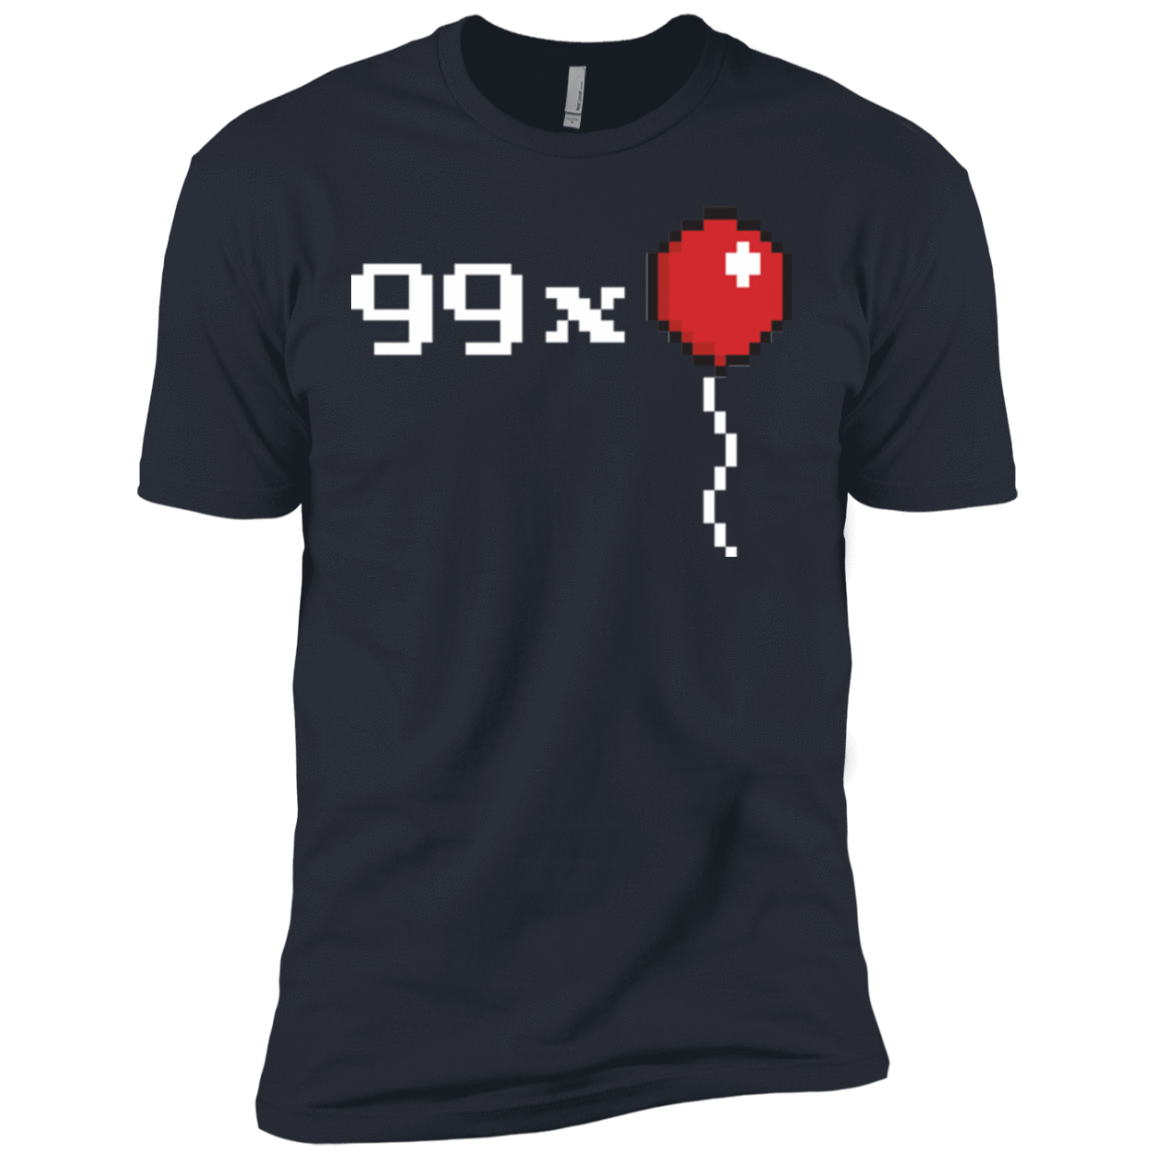 T-Shirts Indigo / X-Small 99x Balloon Men's Premium T-Shirt